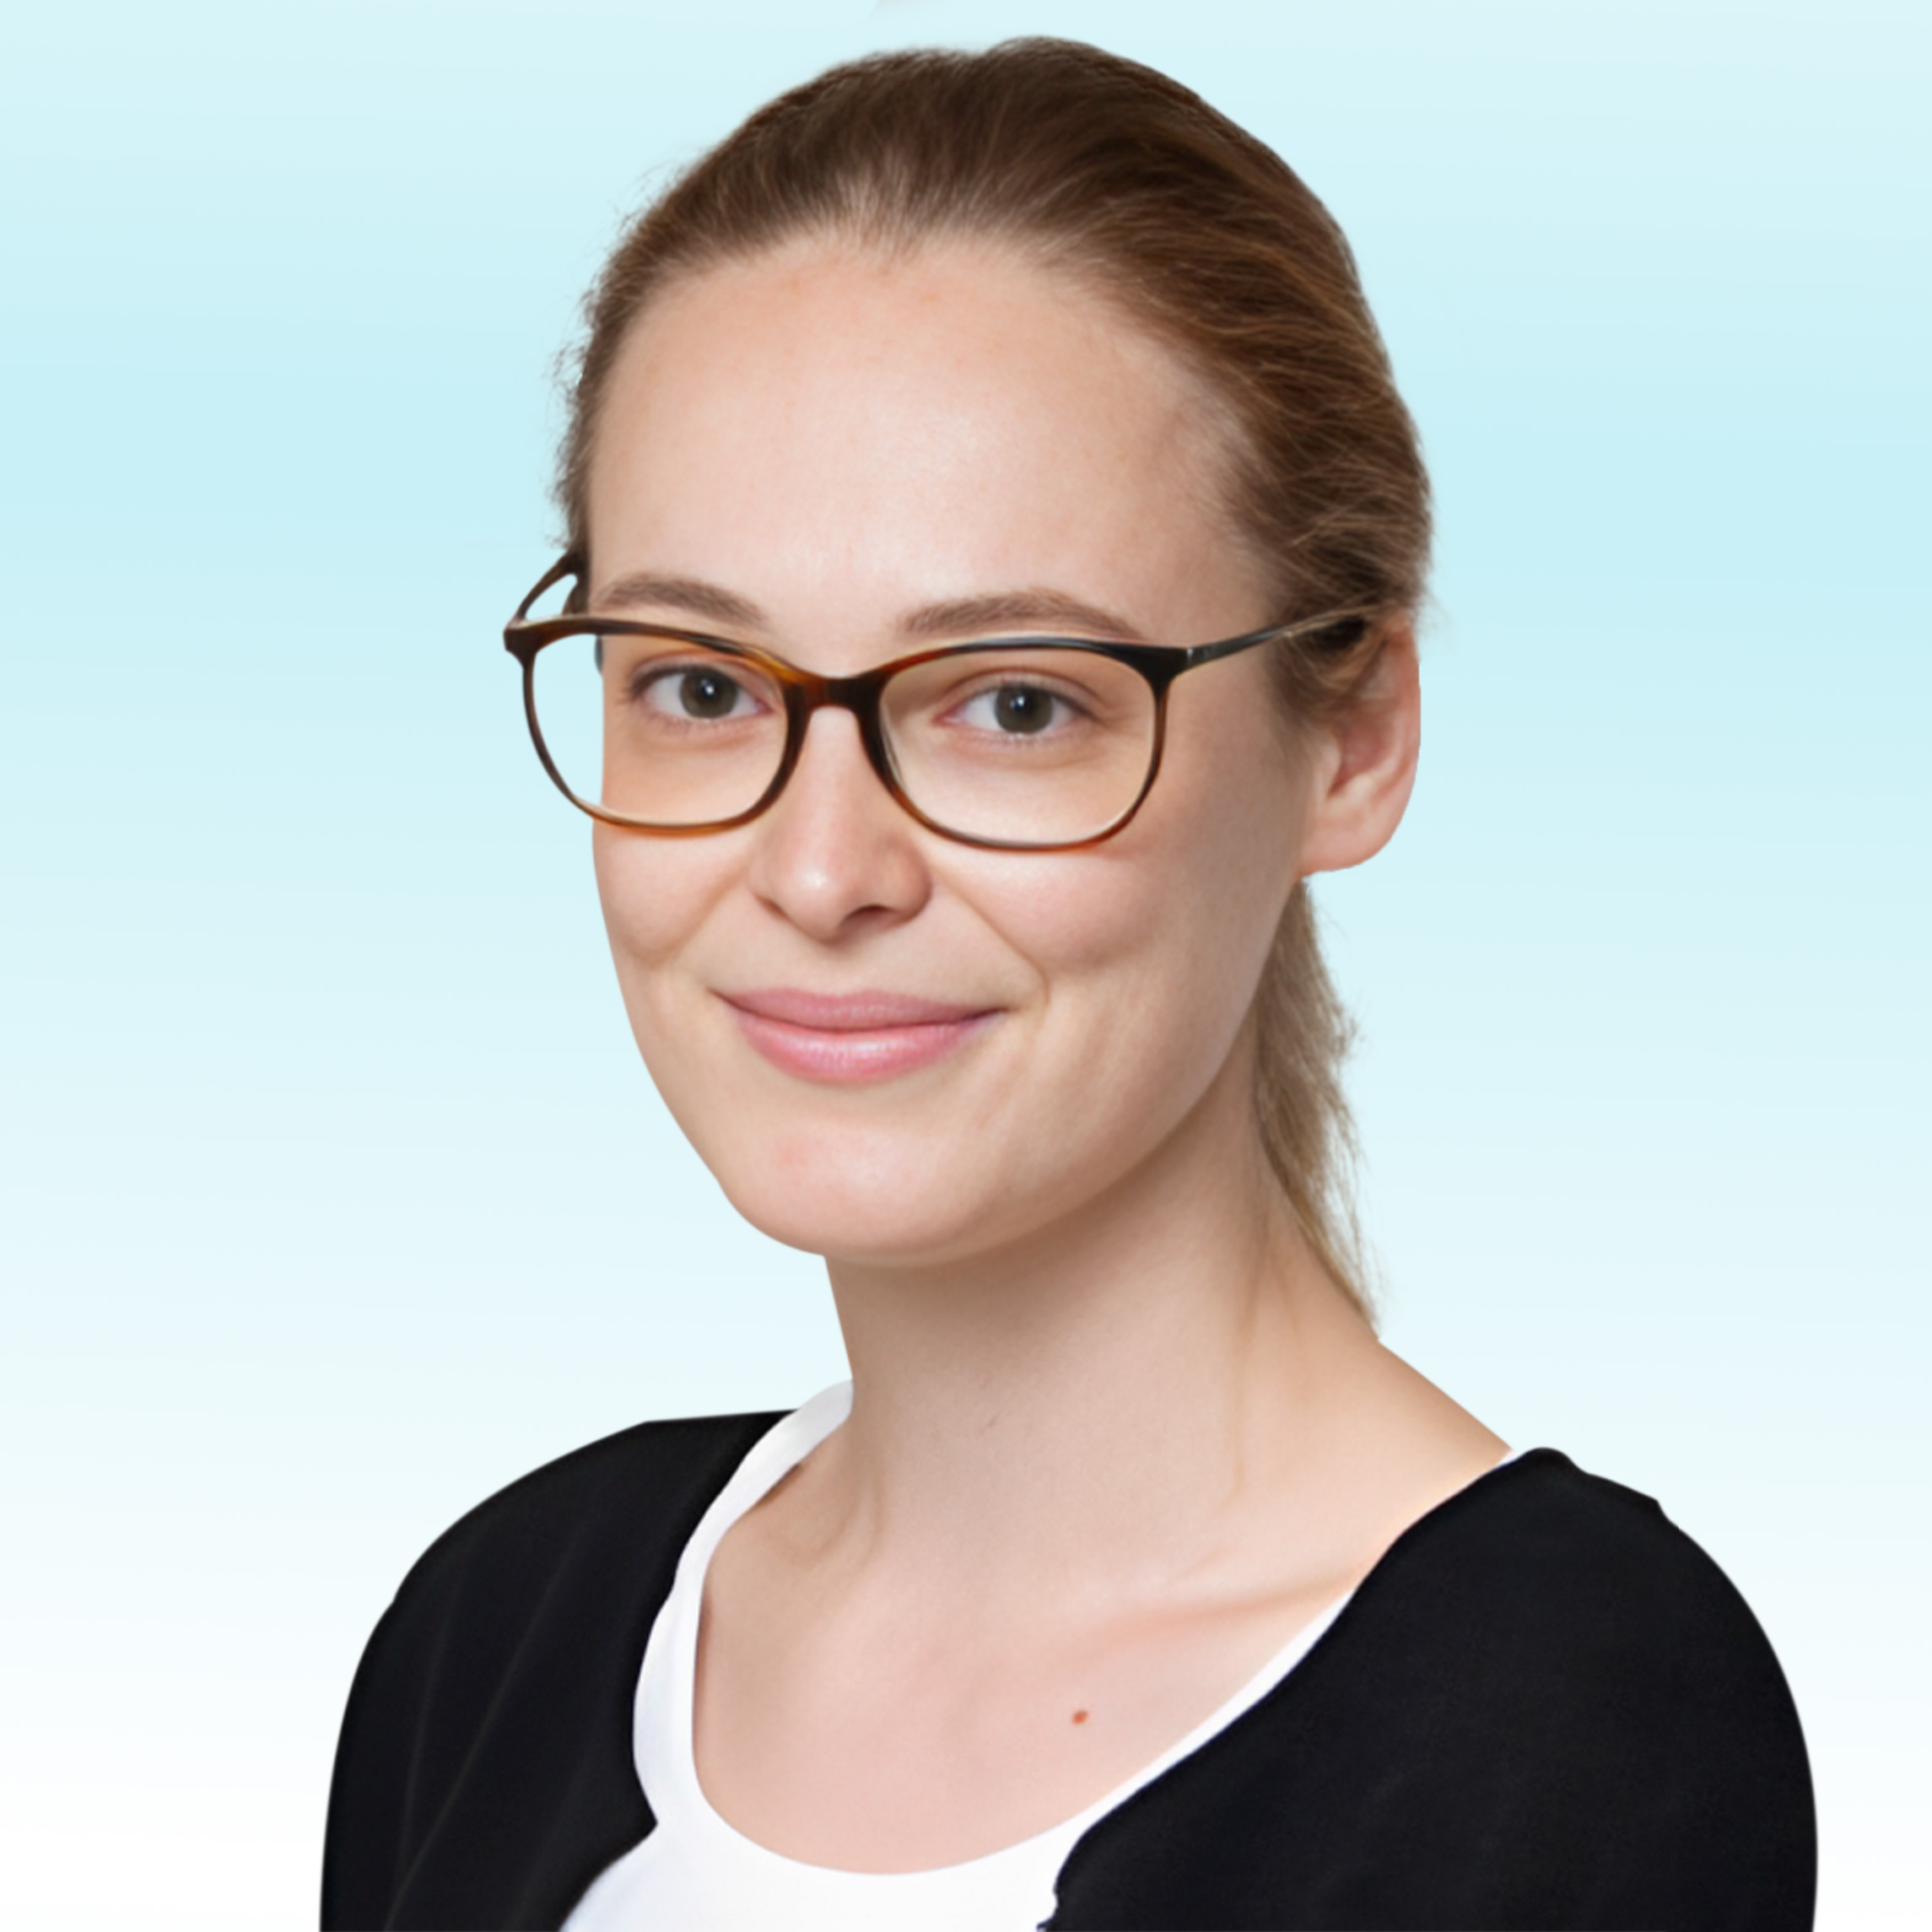 Dermatologo, Dr. med. Meike Kaulfuss